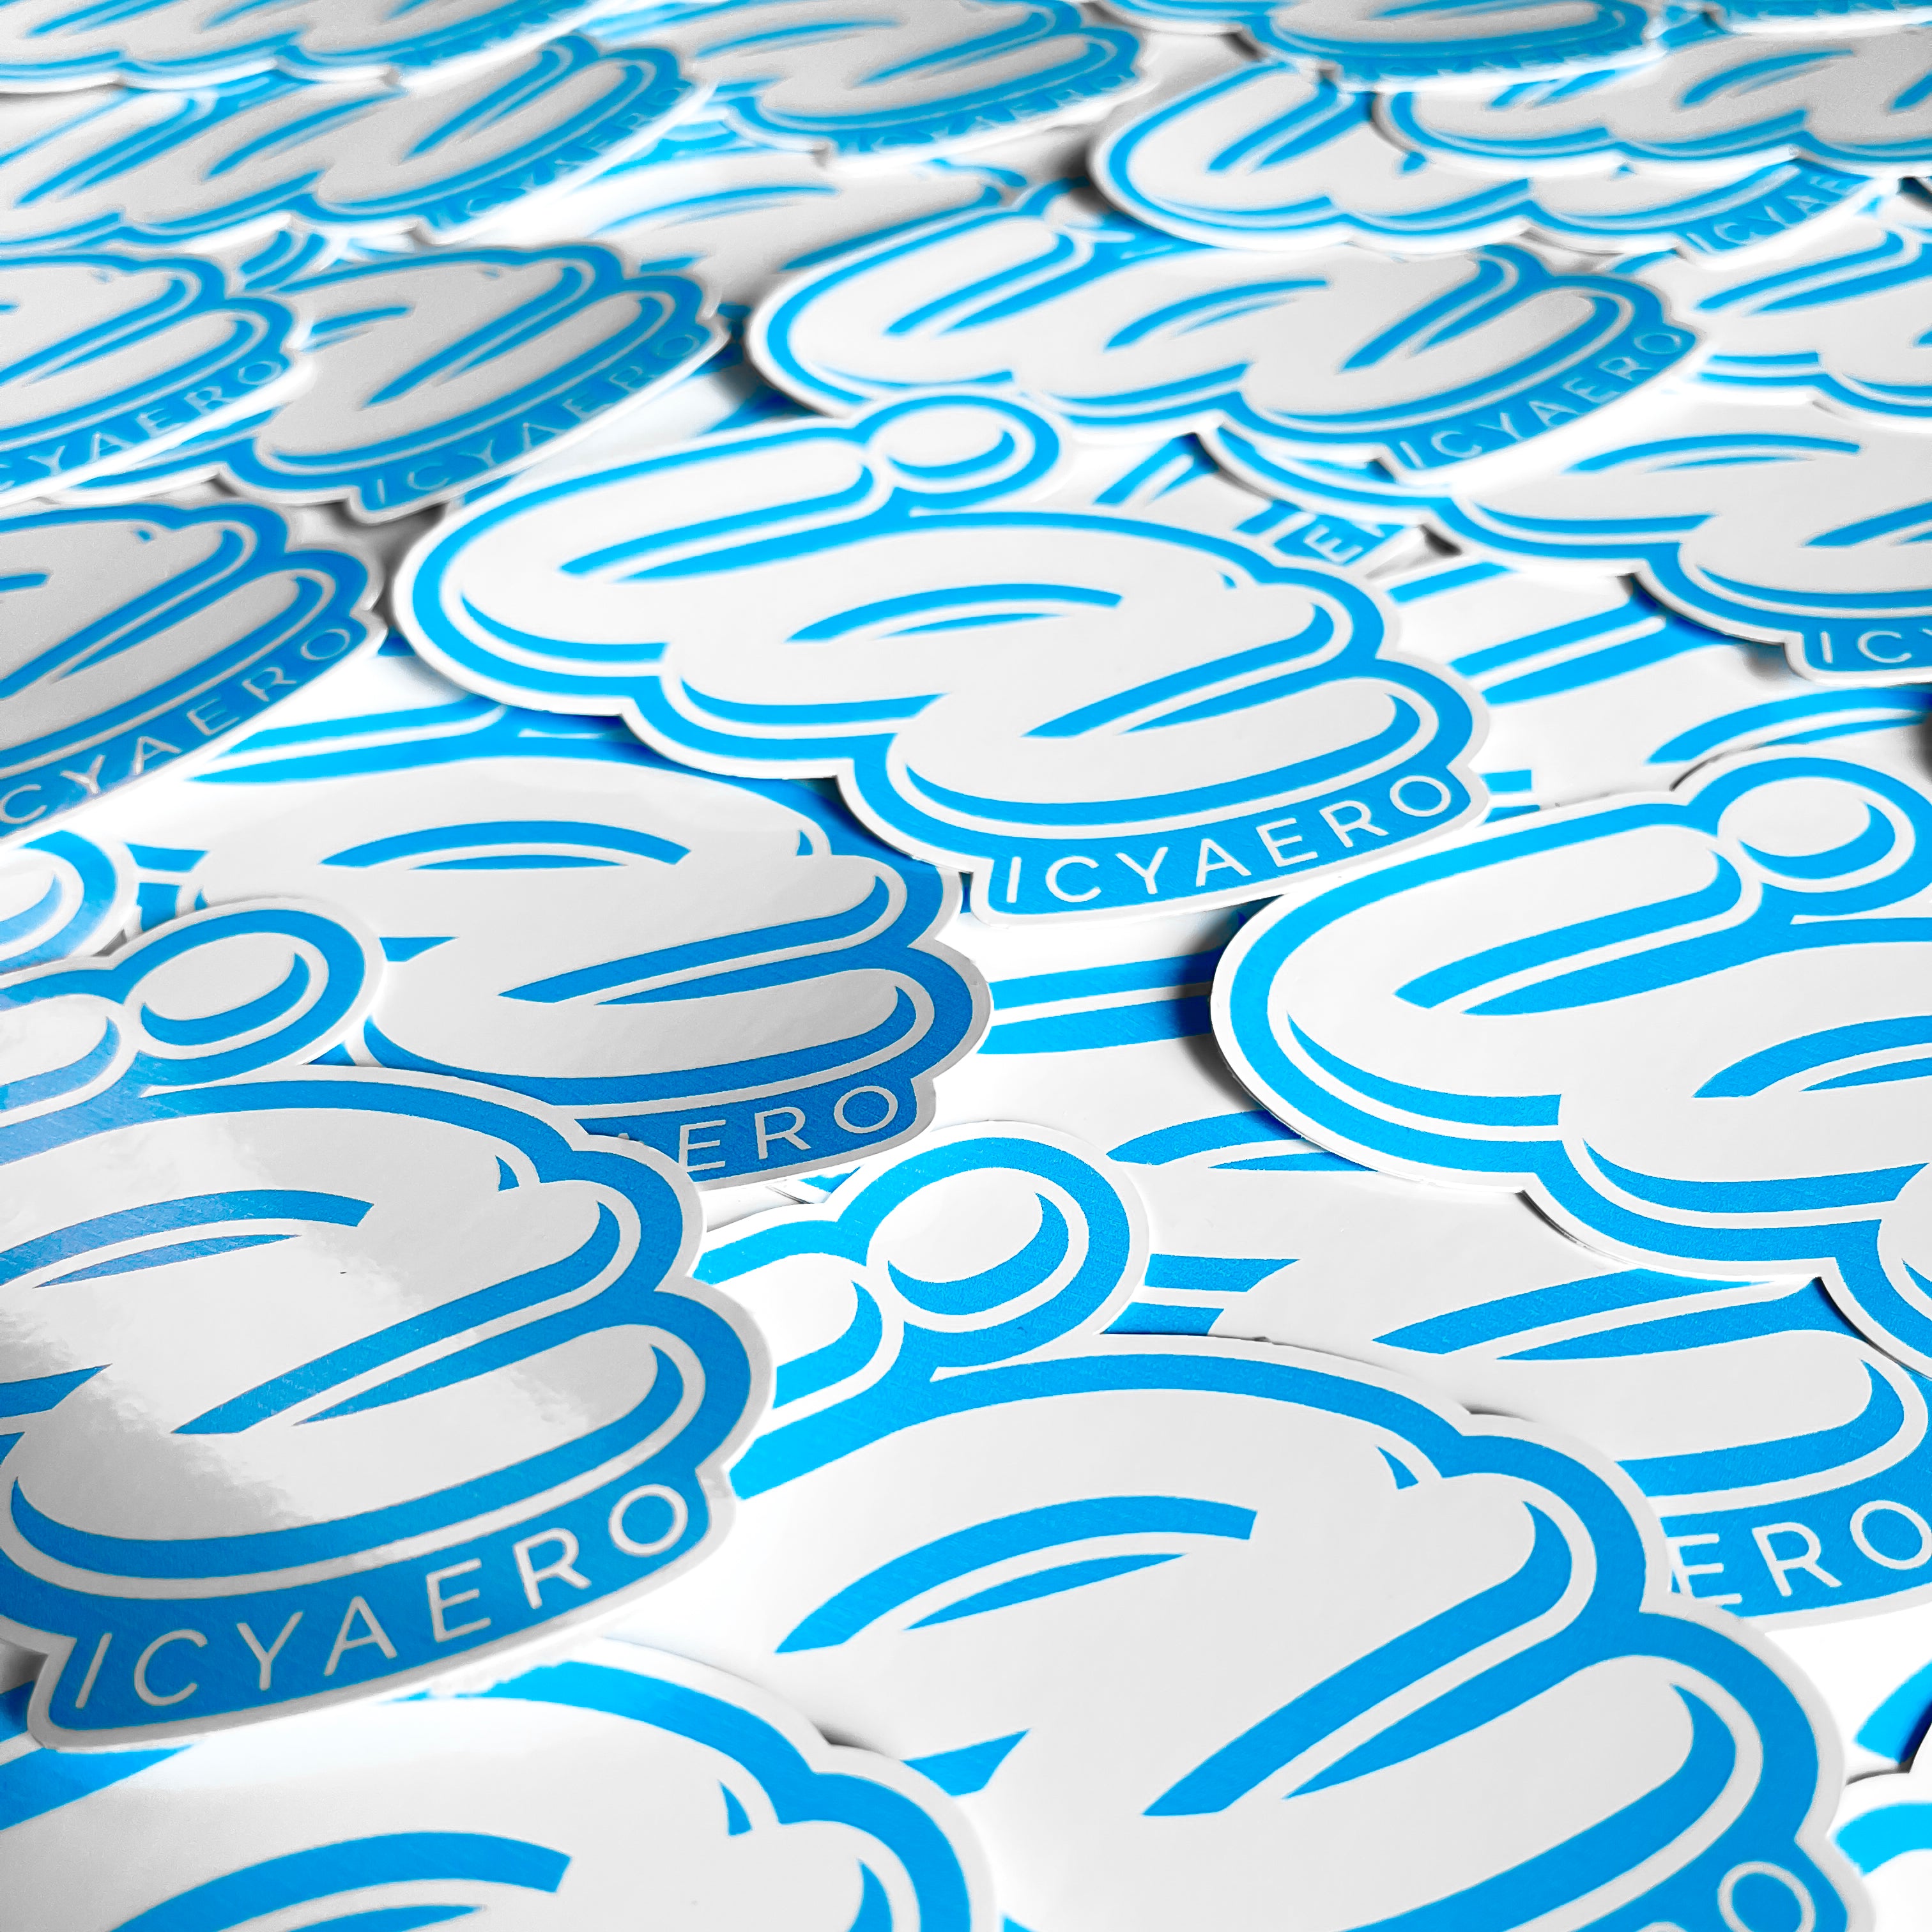 Icyaero "Flow" Sticker - Light Blue